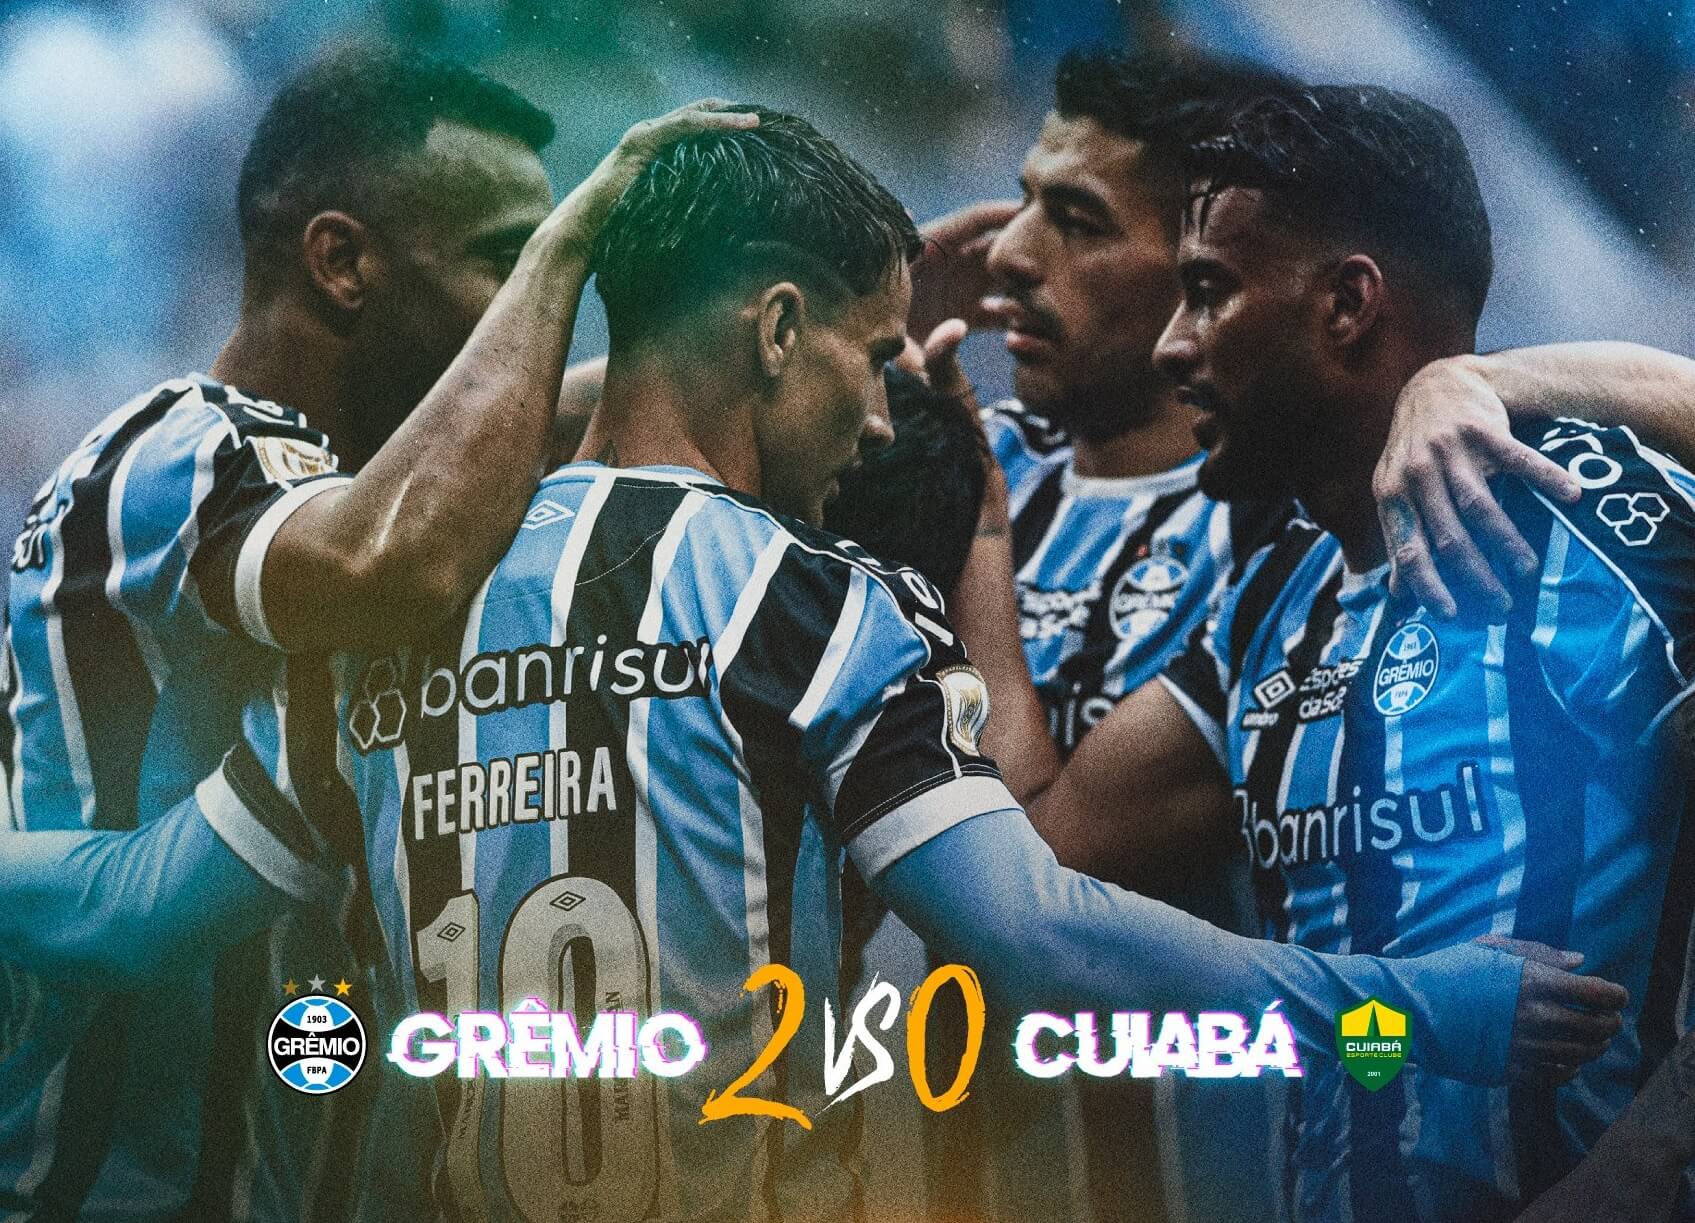 Grêmio vs Fortaleza: A Battle on the Football Pitch